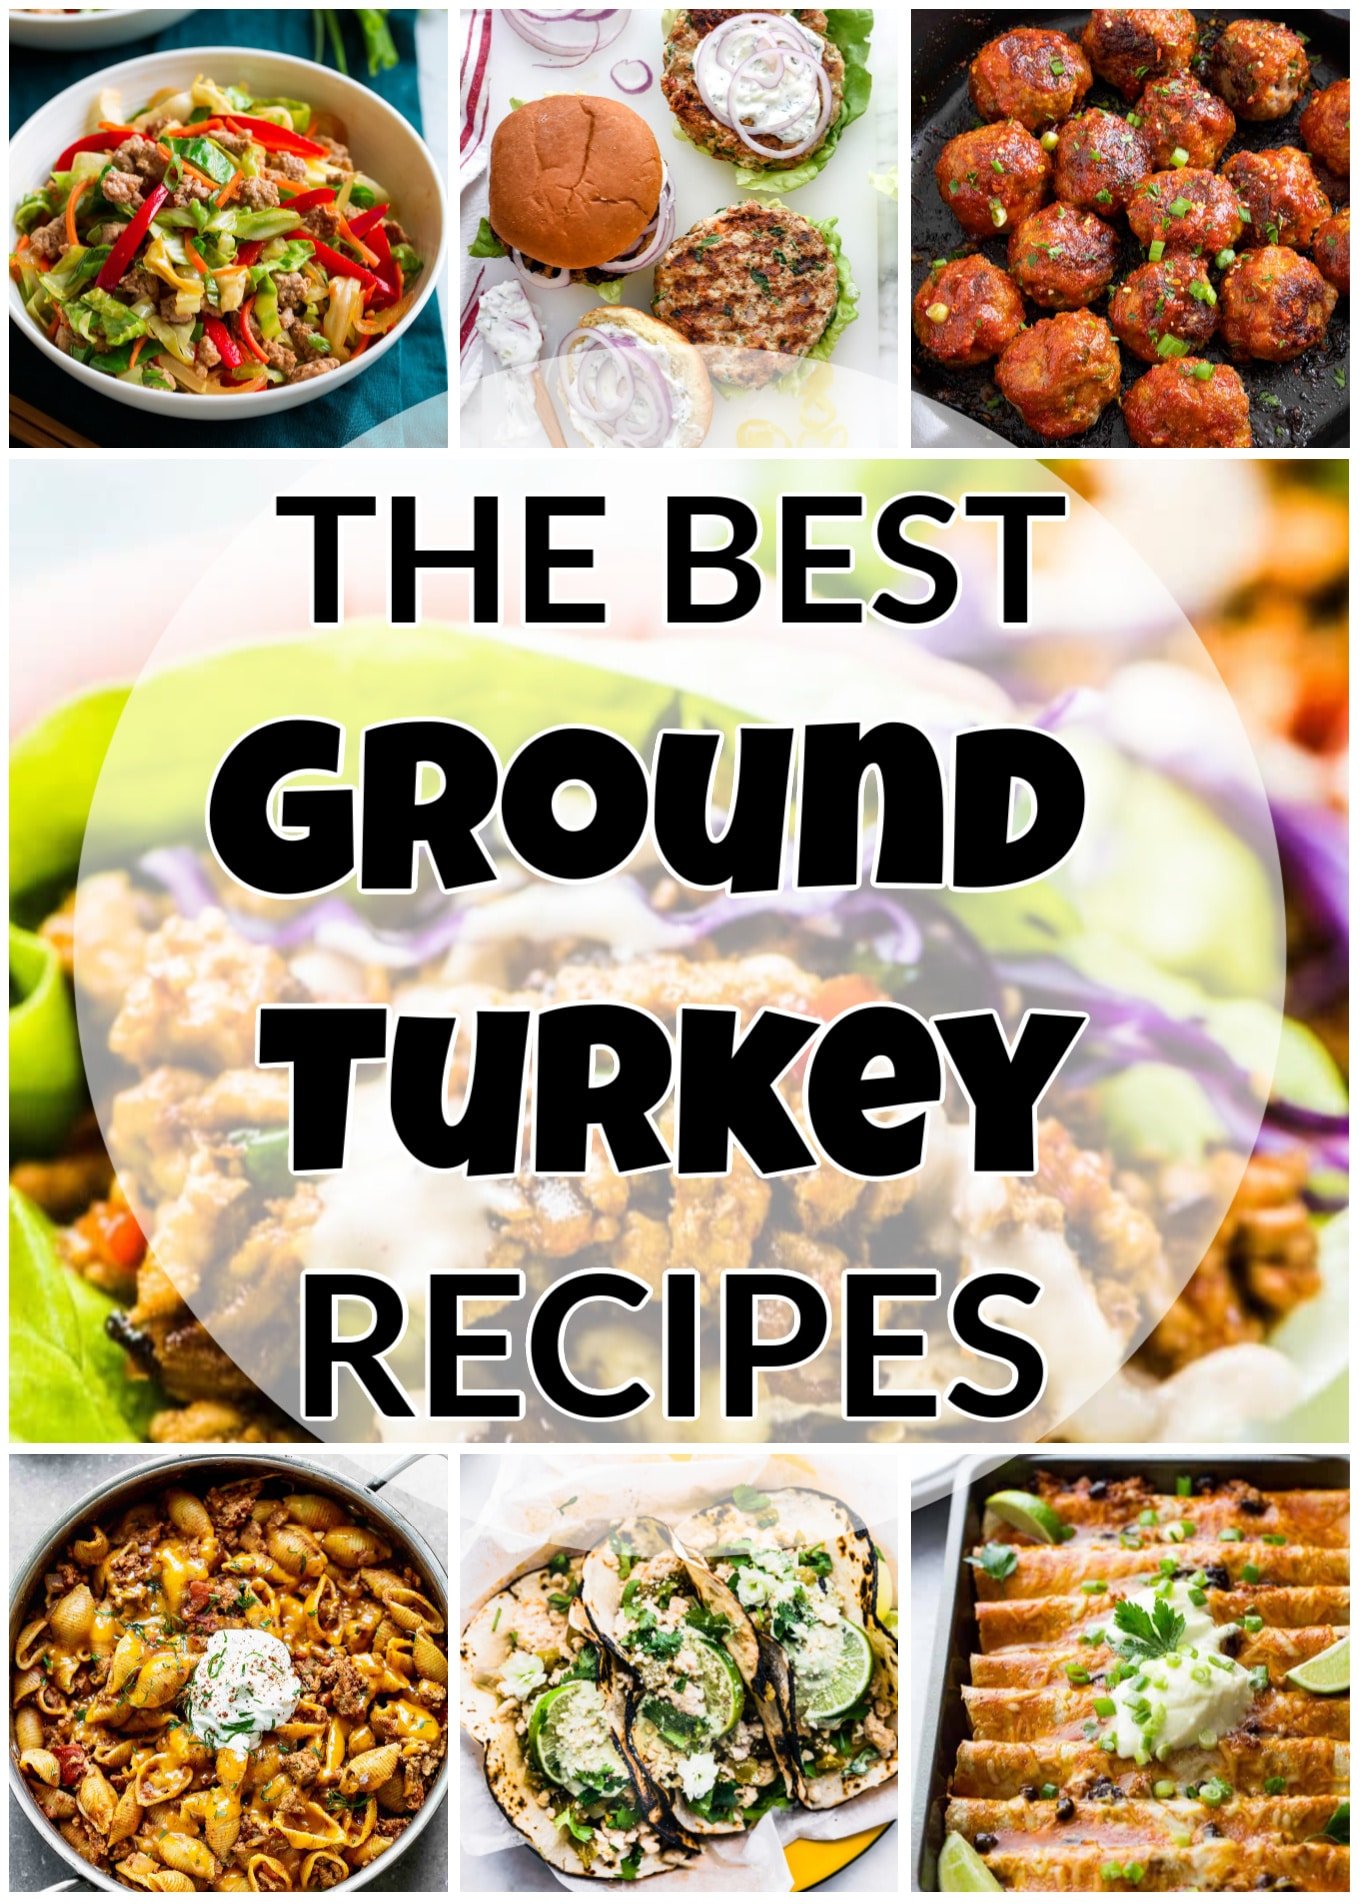 https://www.saltandlavender.com/wp-content/uploads/2020/03/the-best-ground-turkey-recipes.jpg